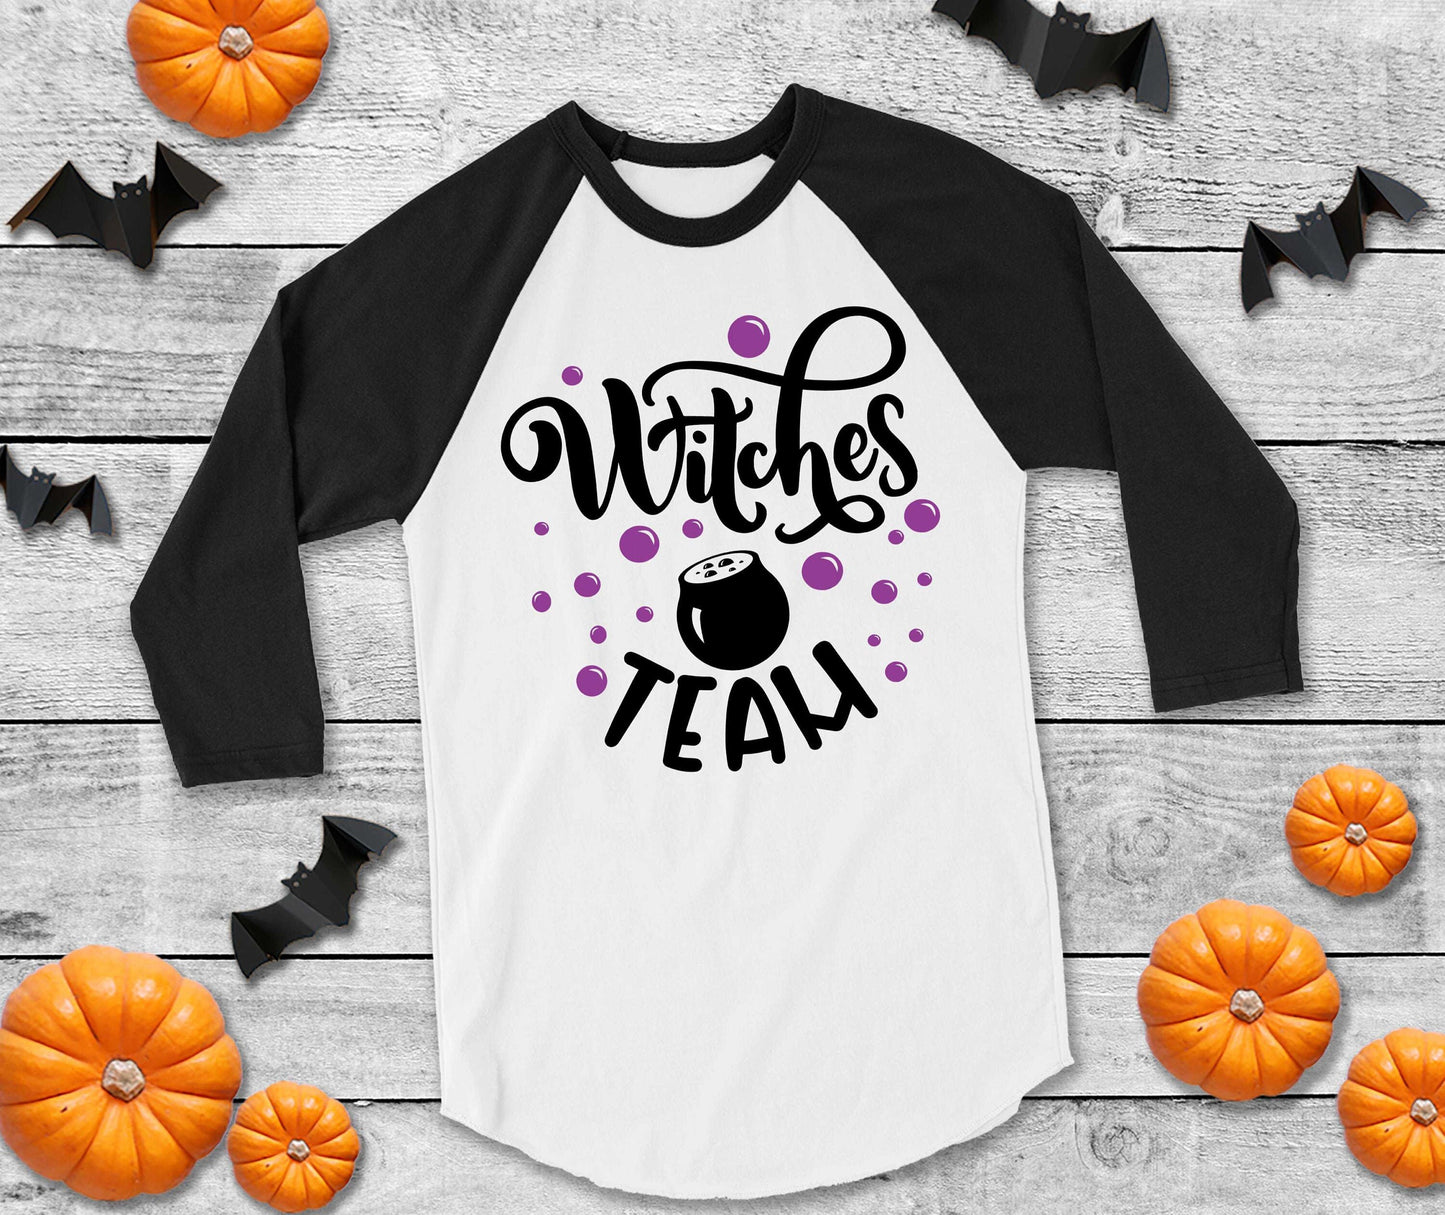 Witches Team raglan unisex adult t-shirt - Halloween Shirt - fall shirt - women's halloween shirt - witch shirt - halloween party shirt